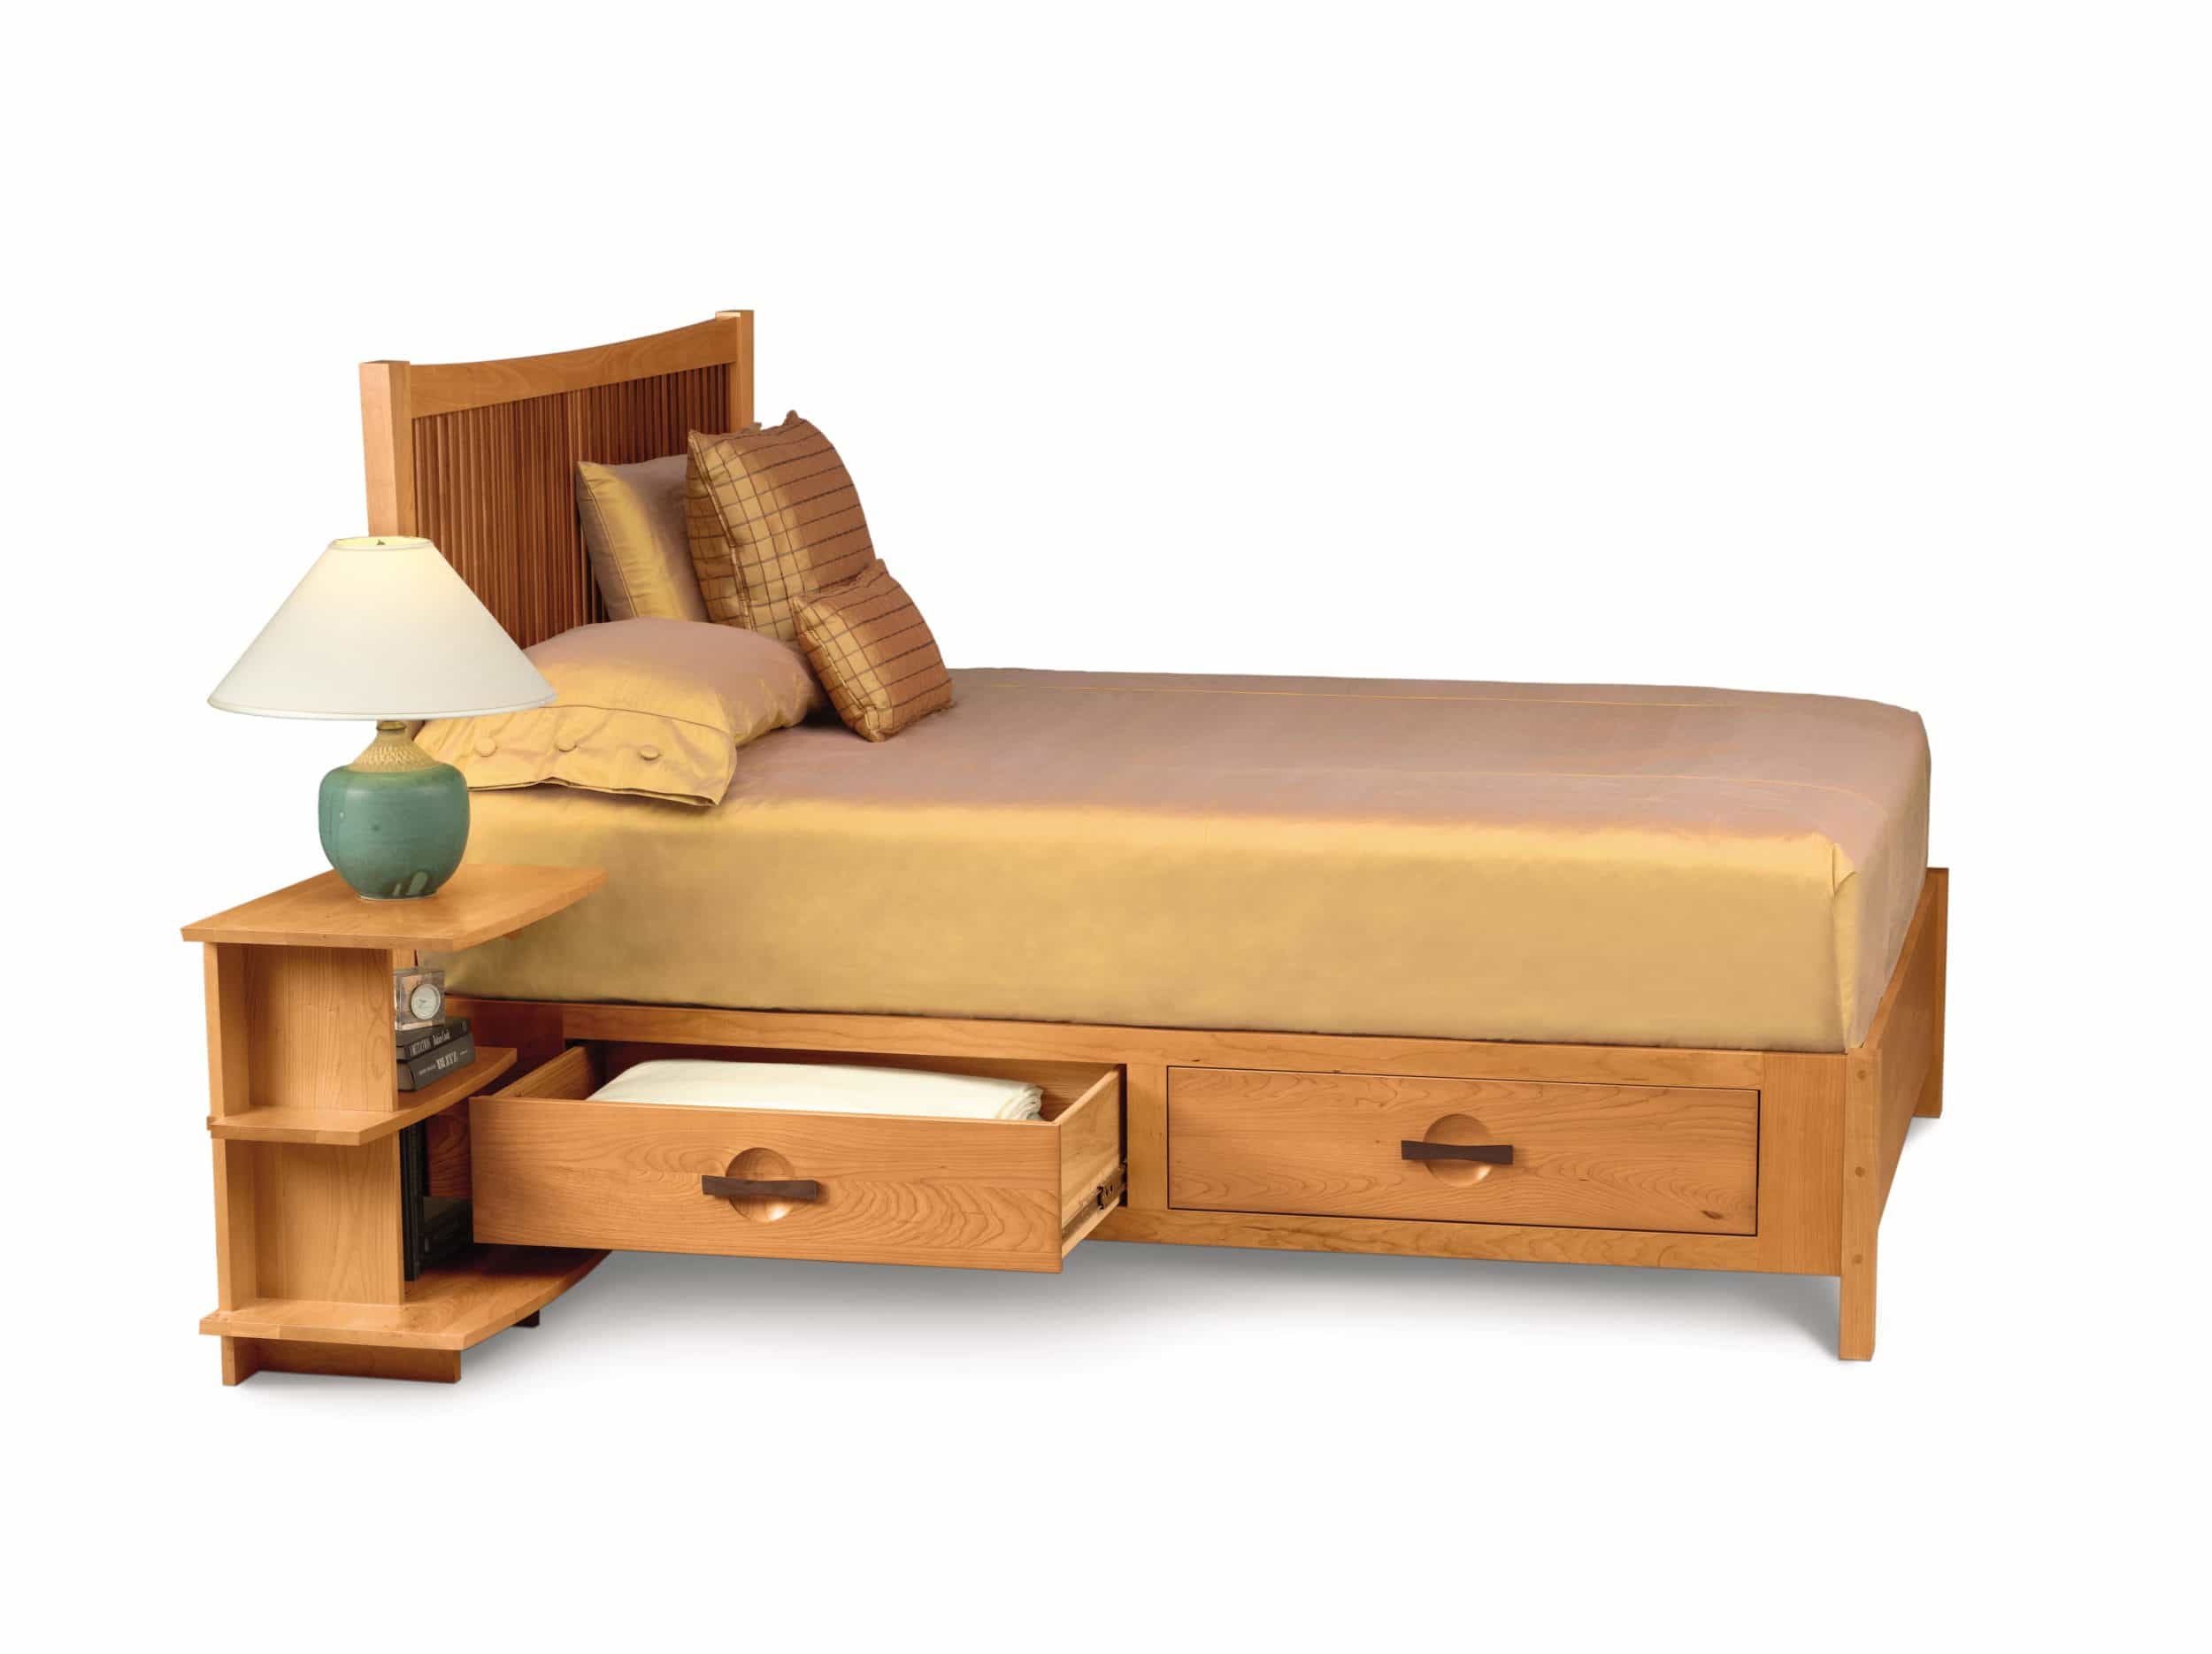 giving away bed frame and mattress berkeley